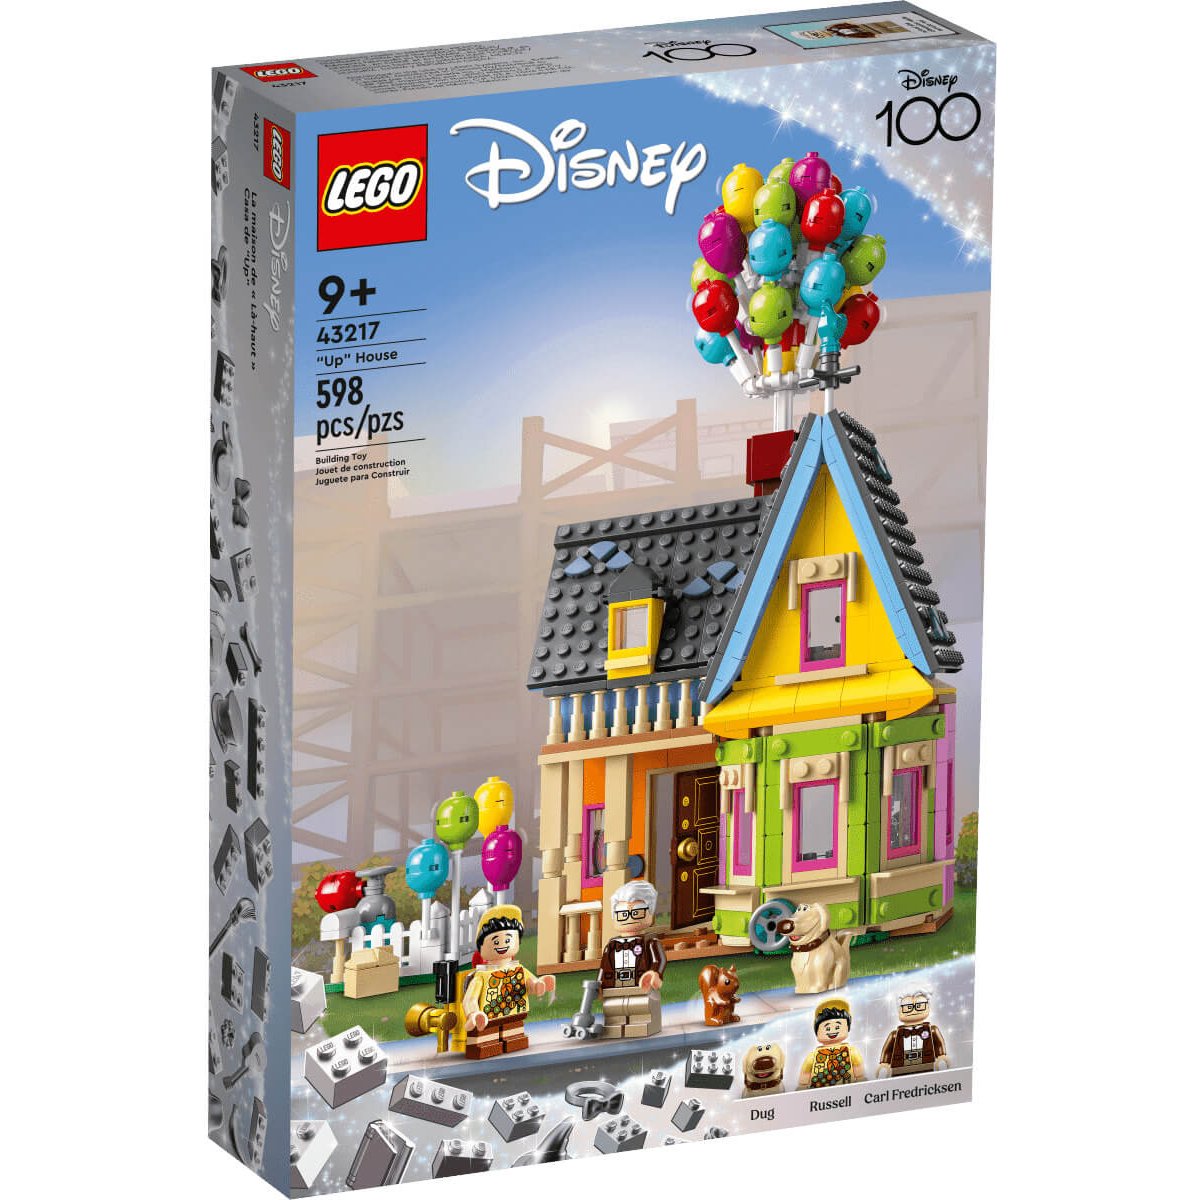 Caja de almacenaje 8 minifiguras LEGO Negro - -5% en libros